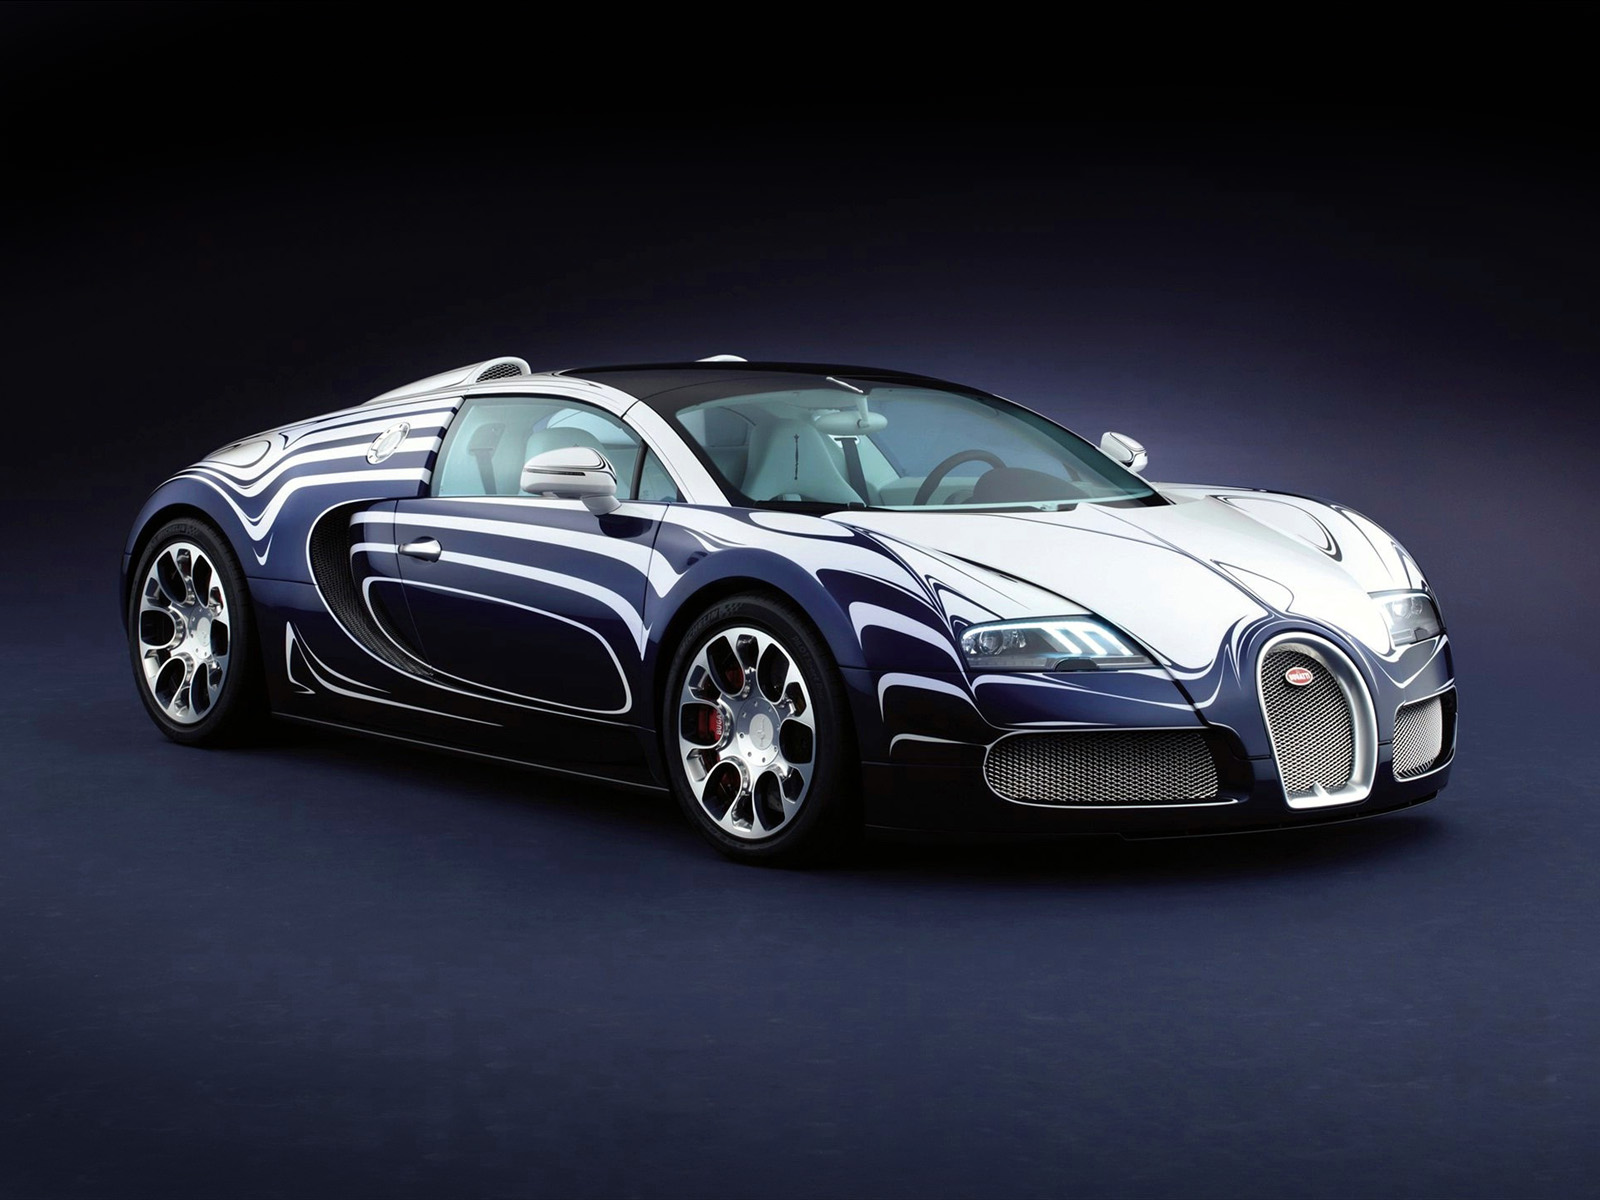 Скачать обои Bugatti Veyron Гранд Спорт Л'ор Блан на телефон бесплатно